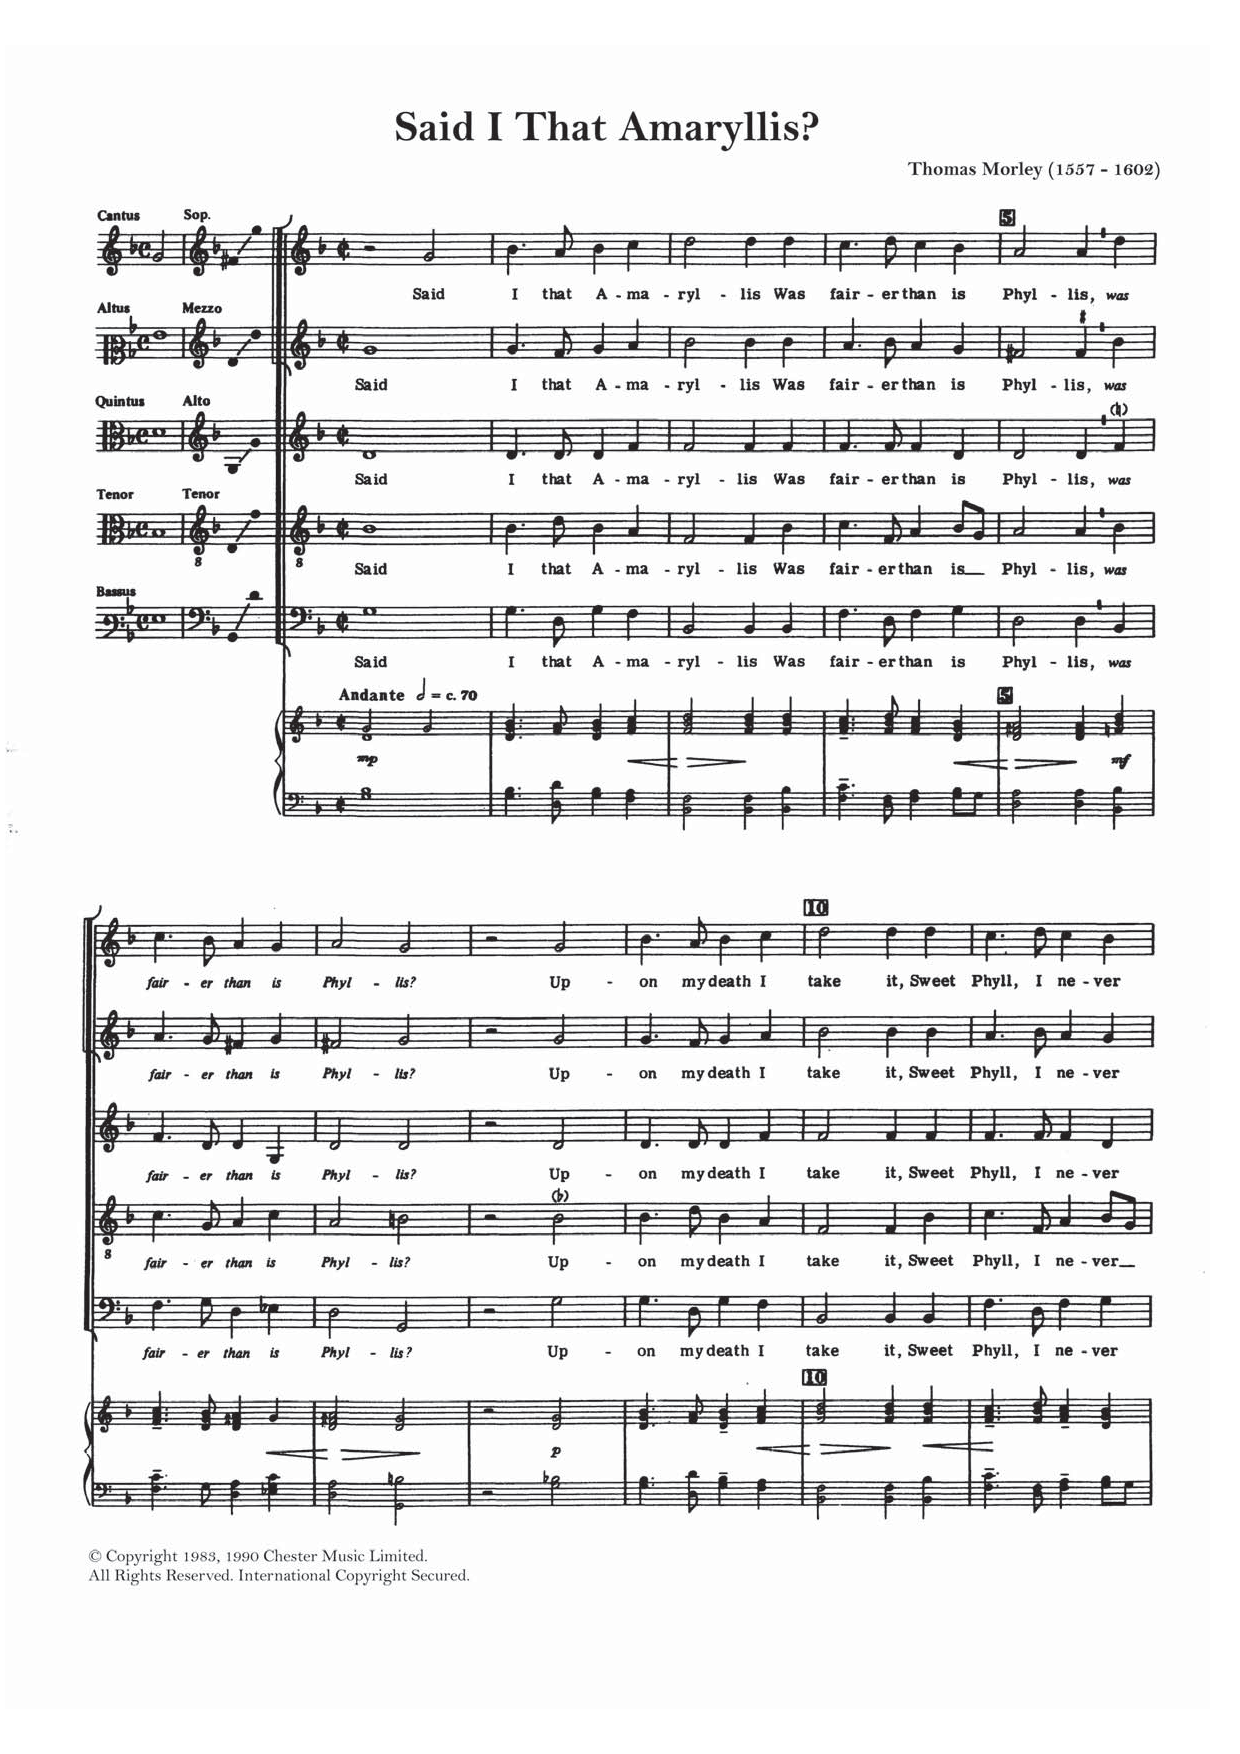 Thomas Morley Said I That Amaryllis? Sheet Music Notes & Chords for Choir - Download or Print PDF